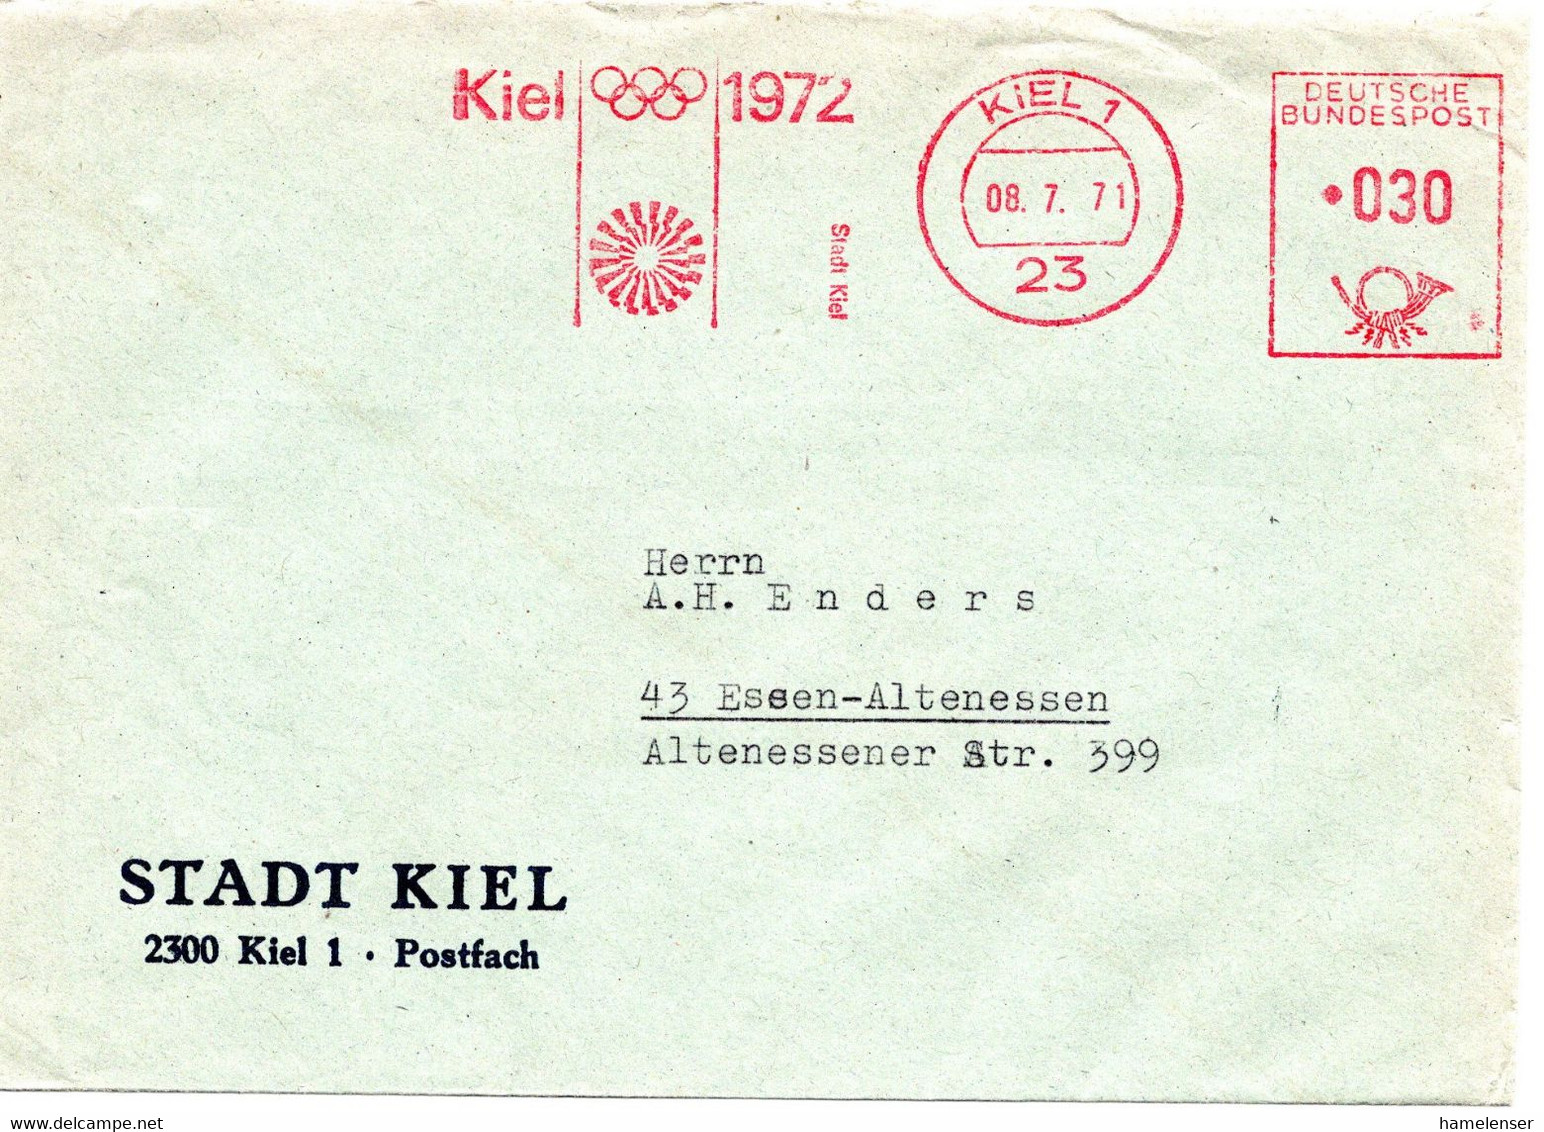 56277 - Bund - 1971 - 30Pfg AbsFreistpl KIEL - KIEL 1972 STADT KIEL -> Essen - Ete 1972: Munich